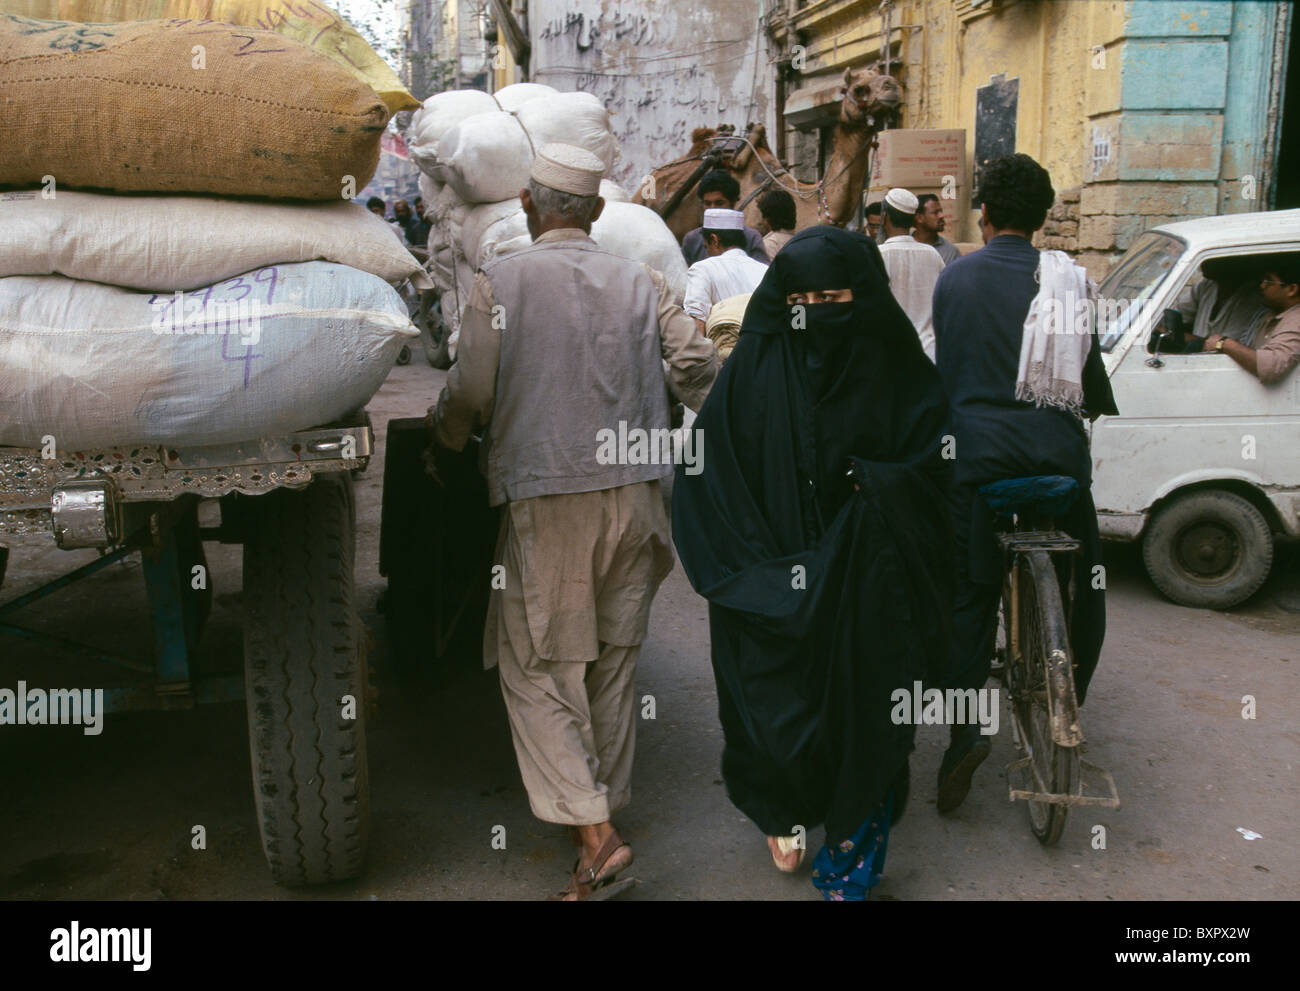 A veiled Muslim woman walks through the market area of Karachi, Pakistan. Stock Photo